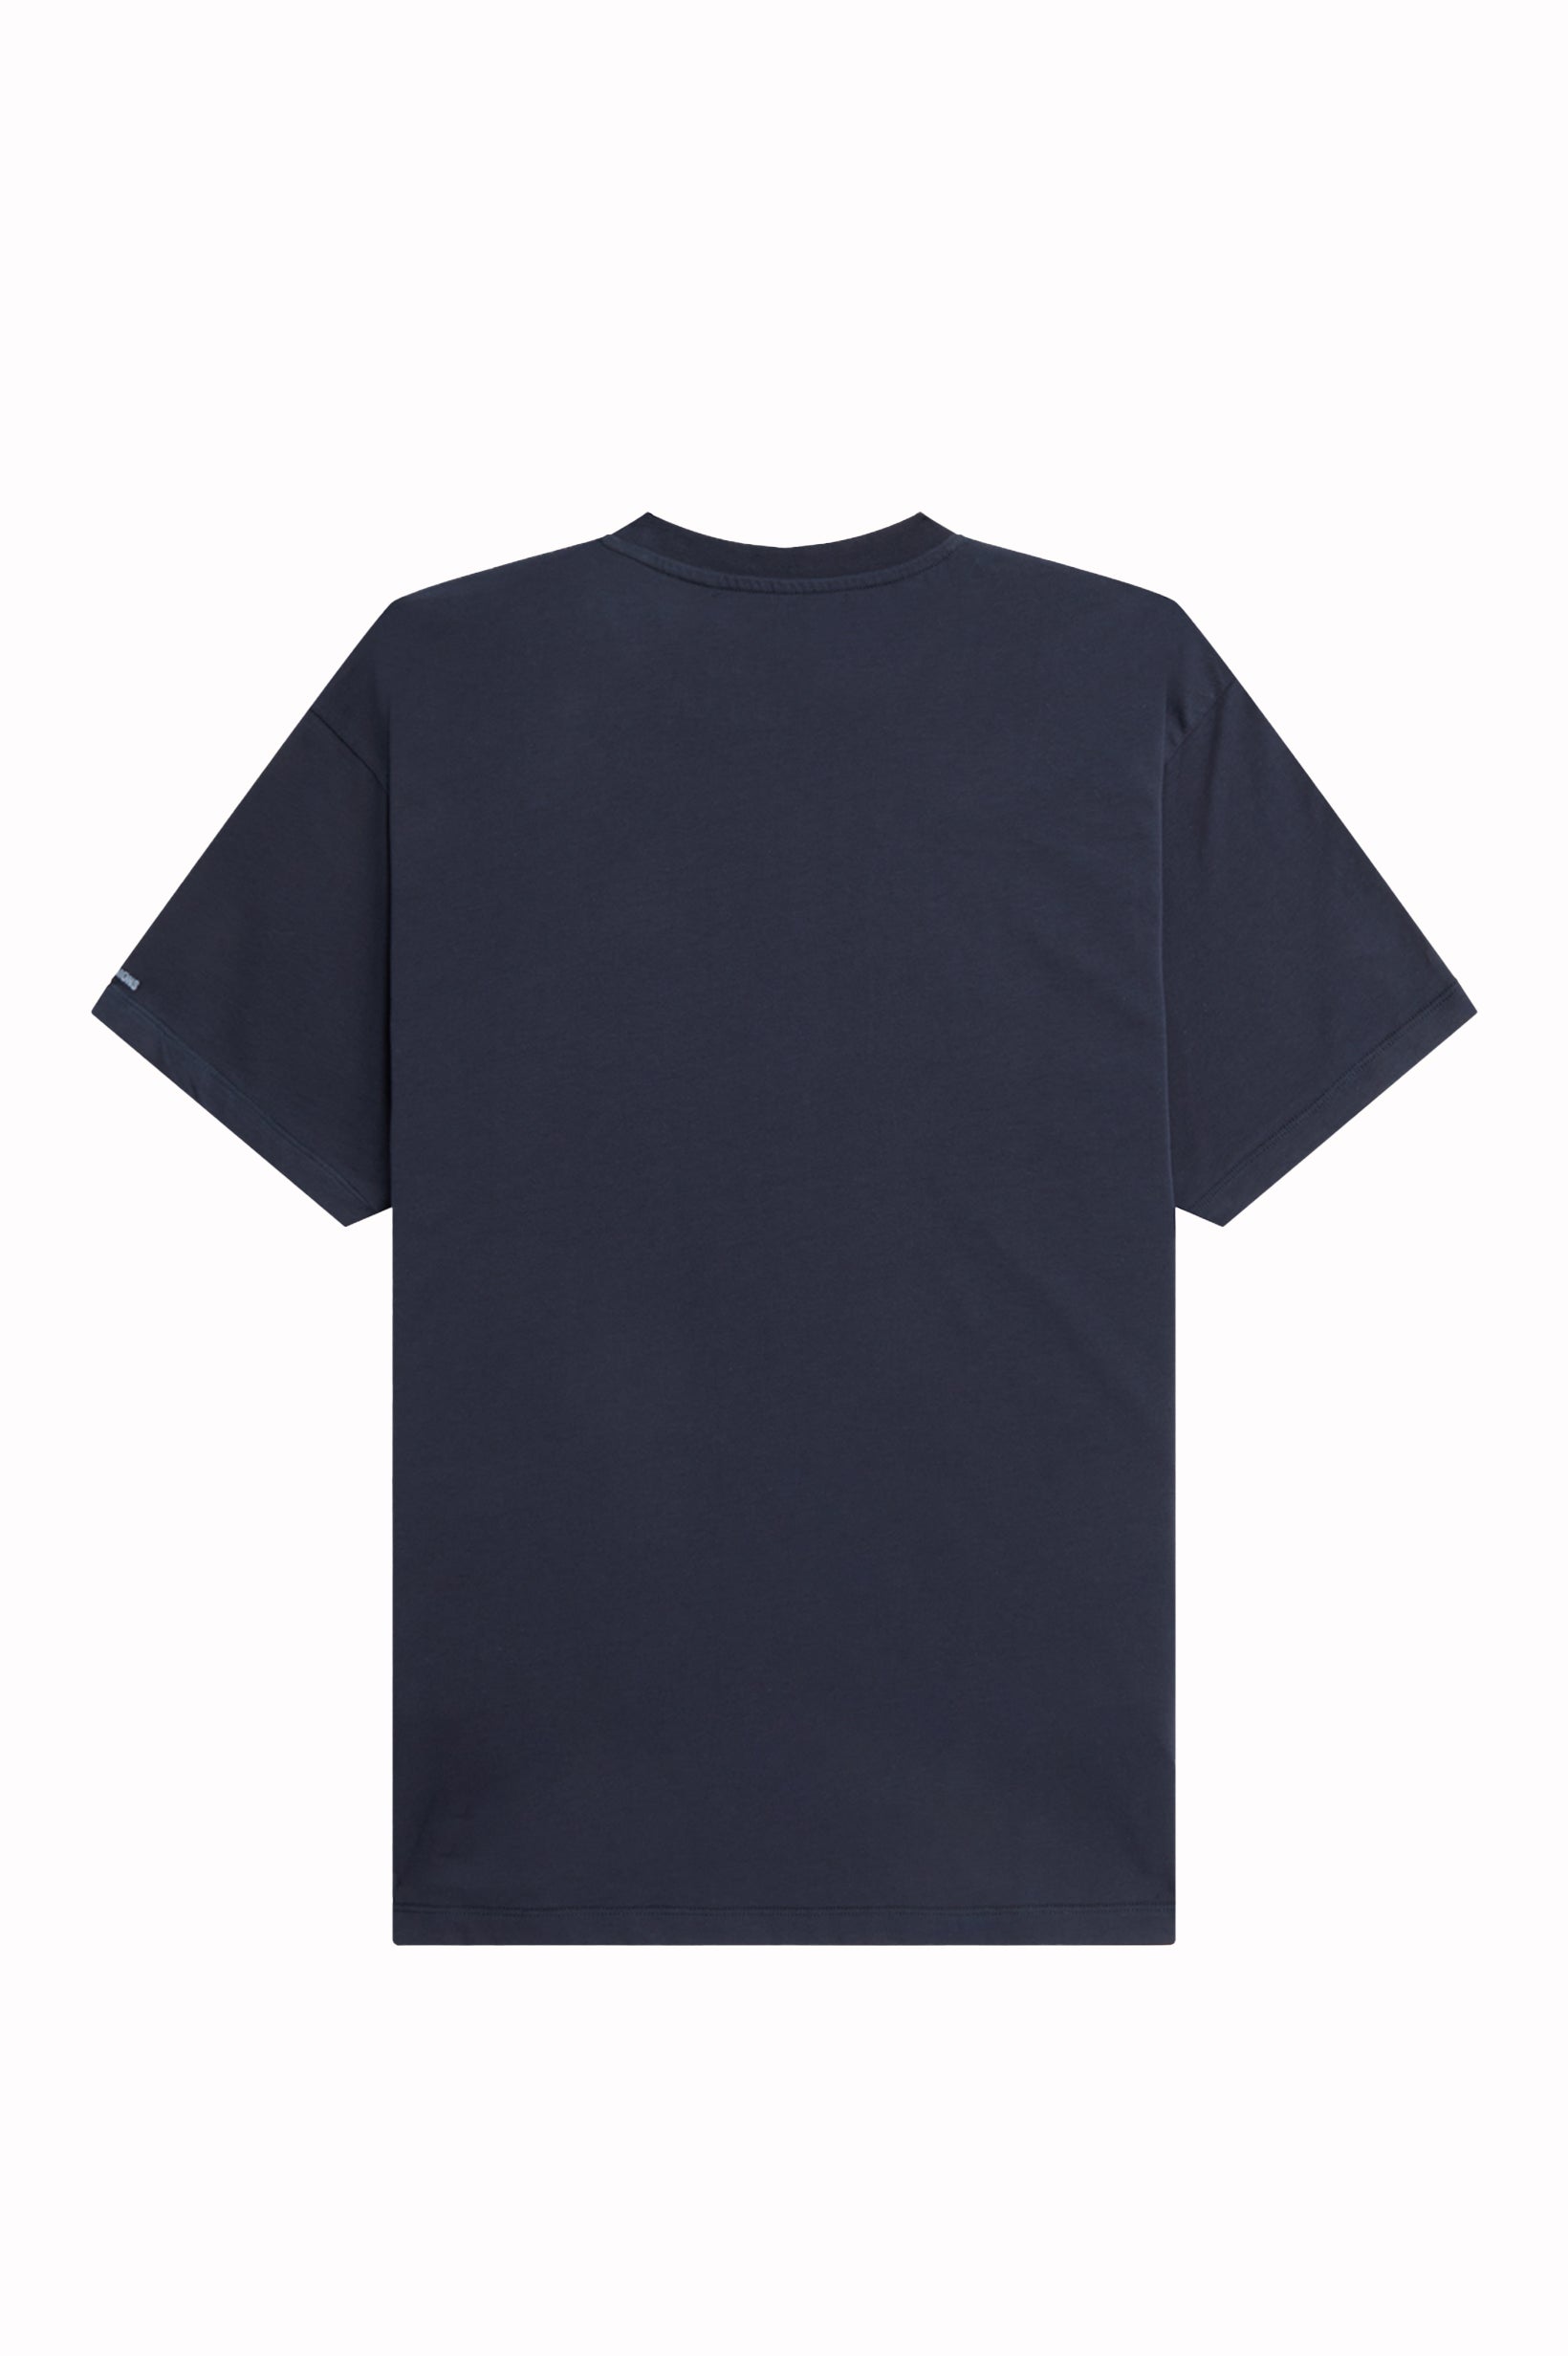 Fred Perry x Raf Simons Printed T-Shirt Navy Blue